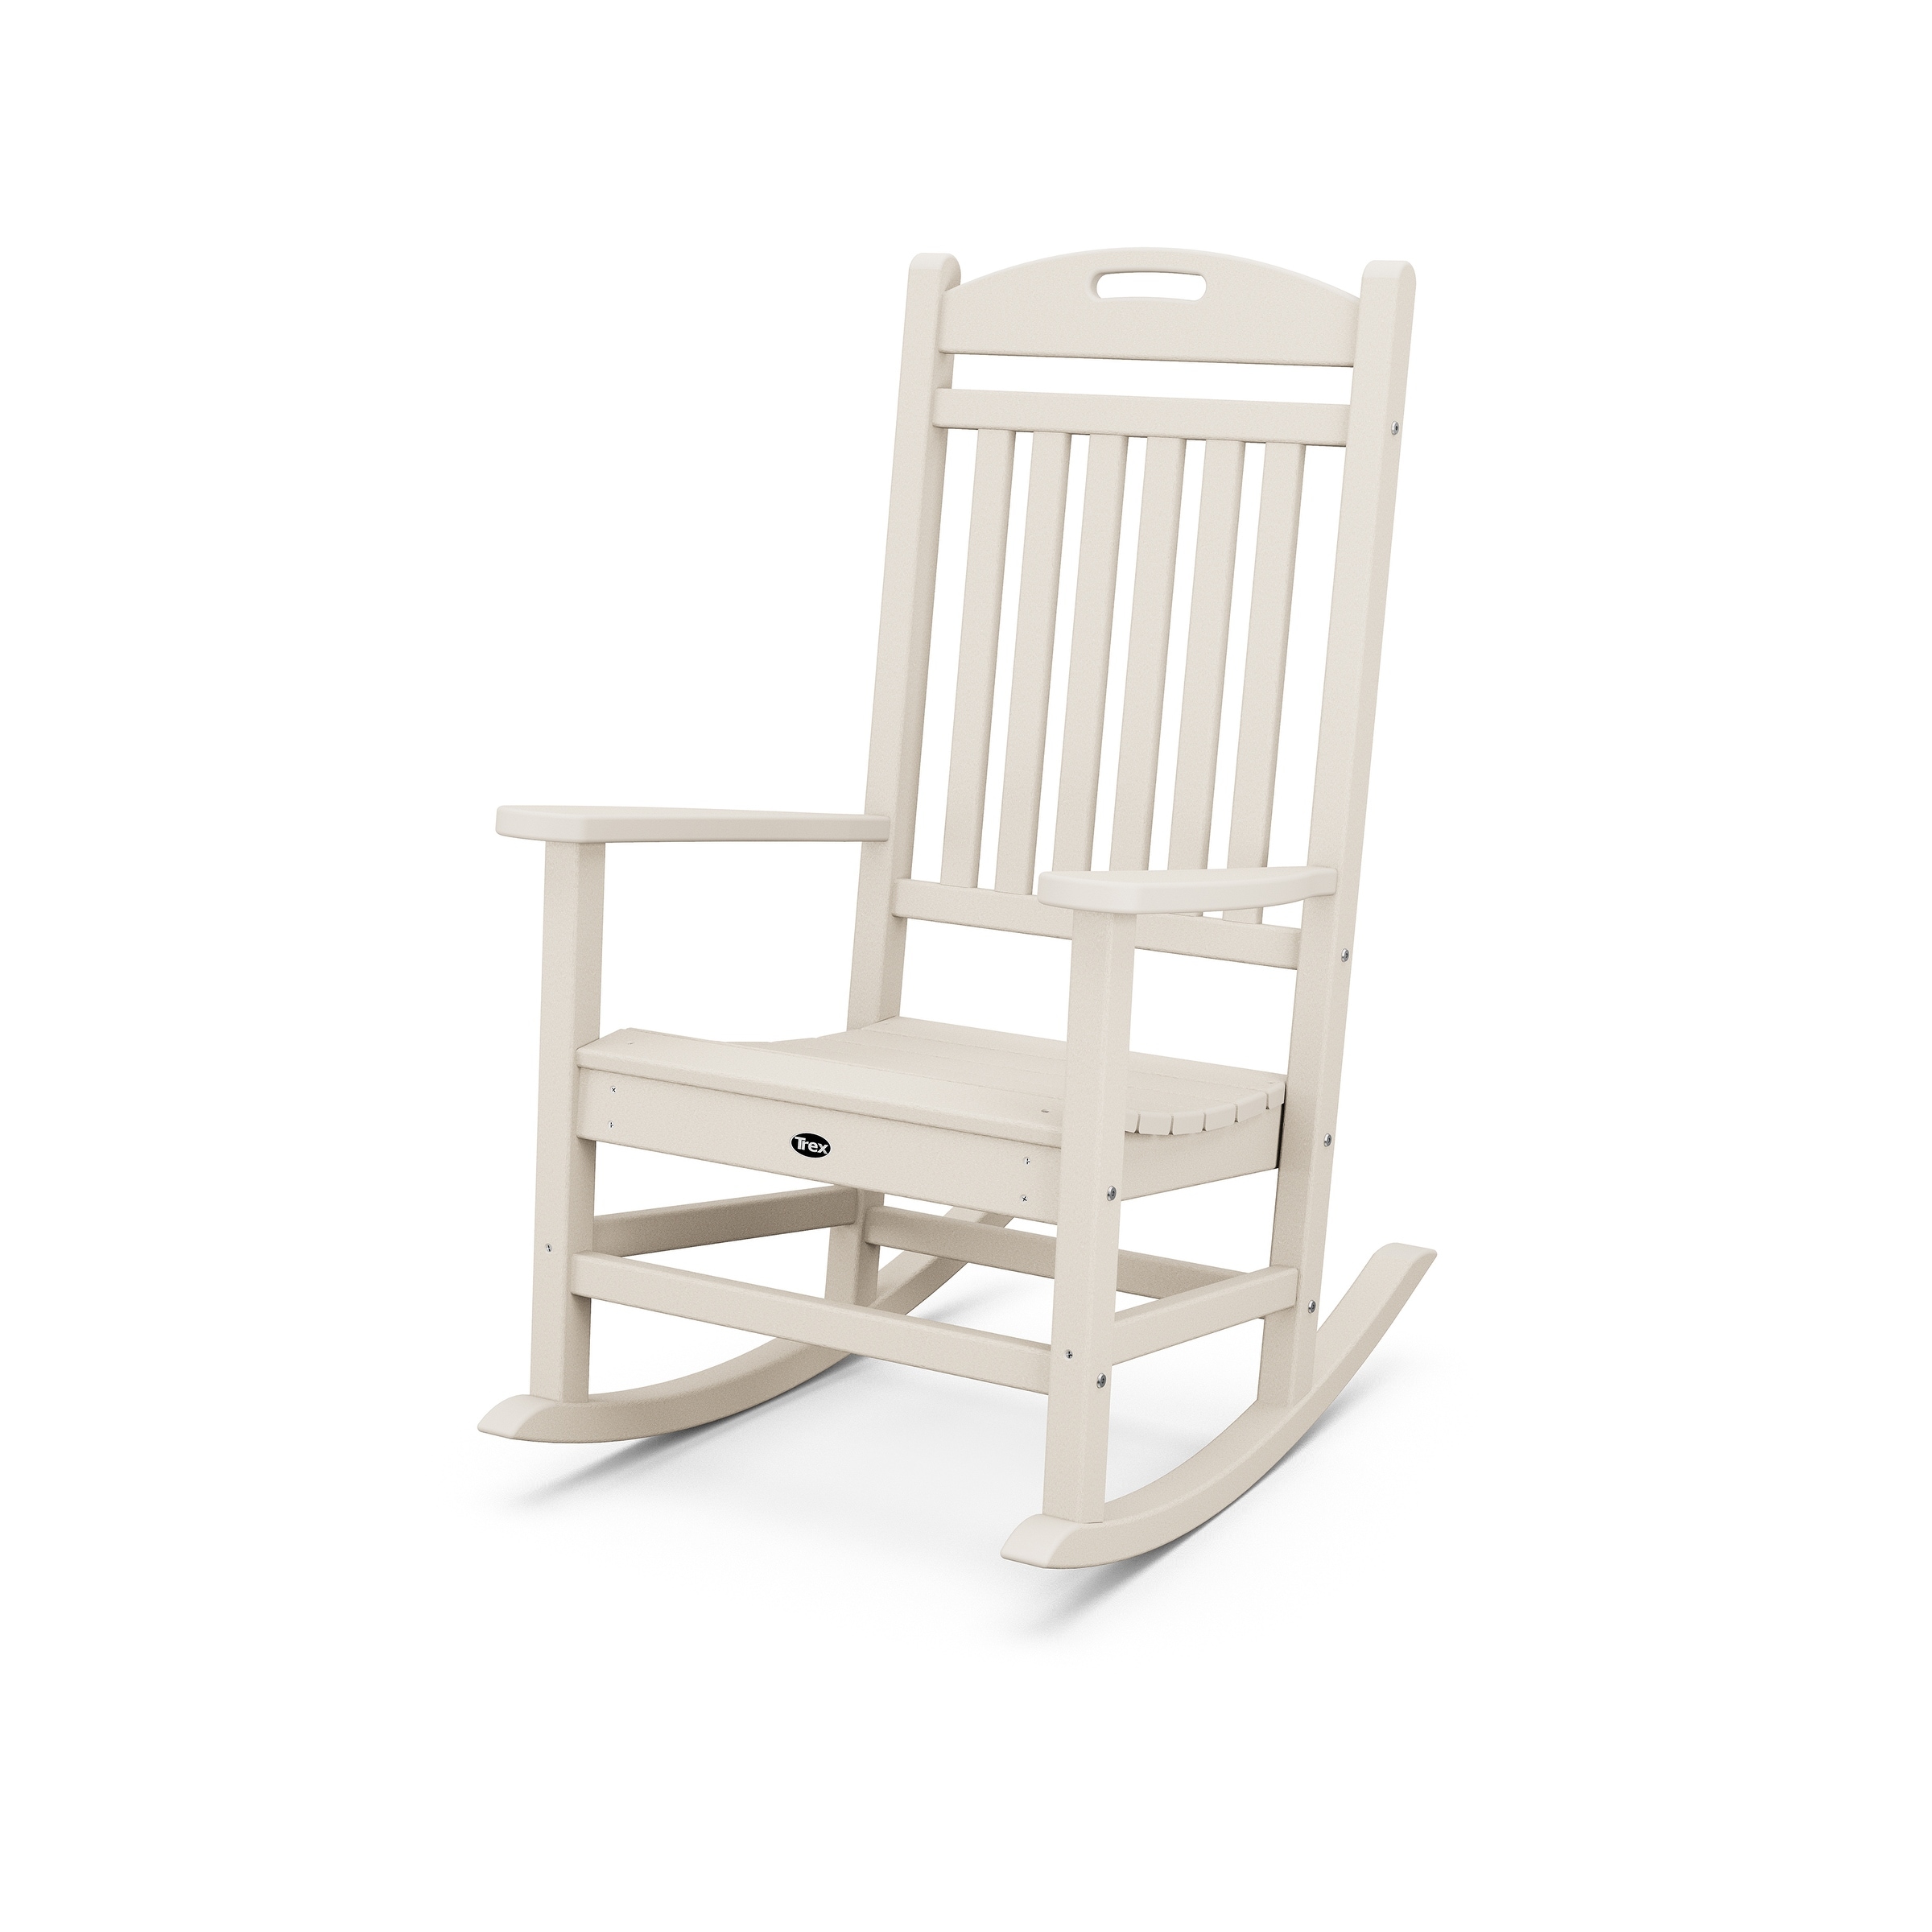 Polywood Trex Outdoor Furniture Yacht Club Rocking Chair